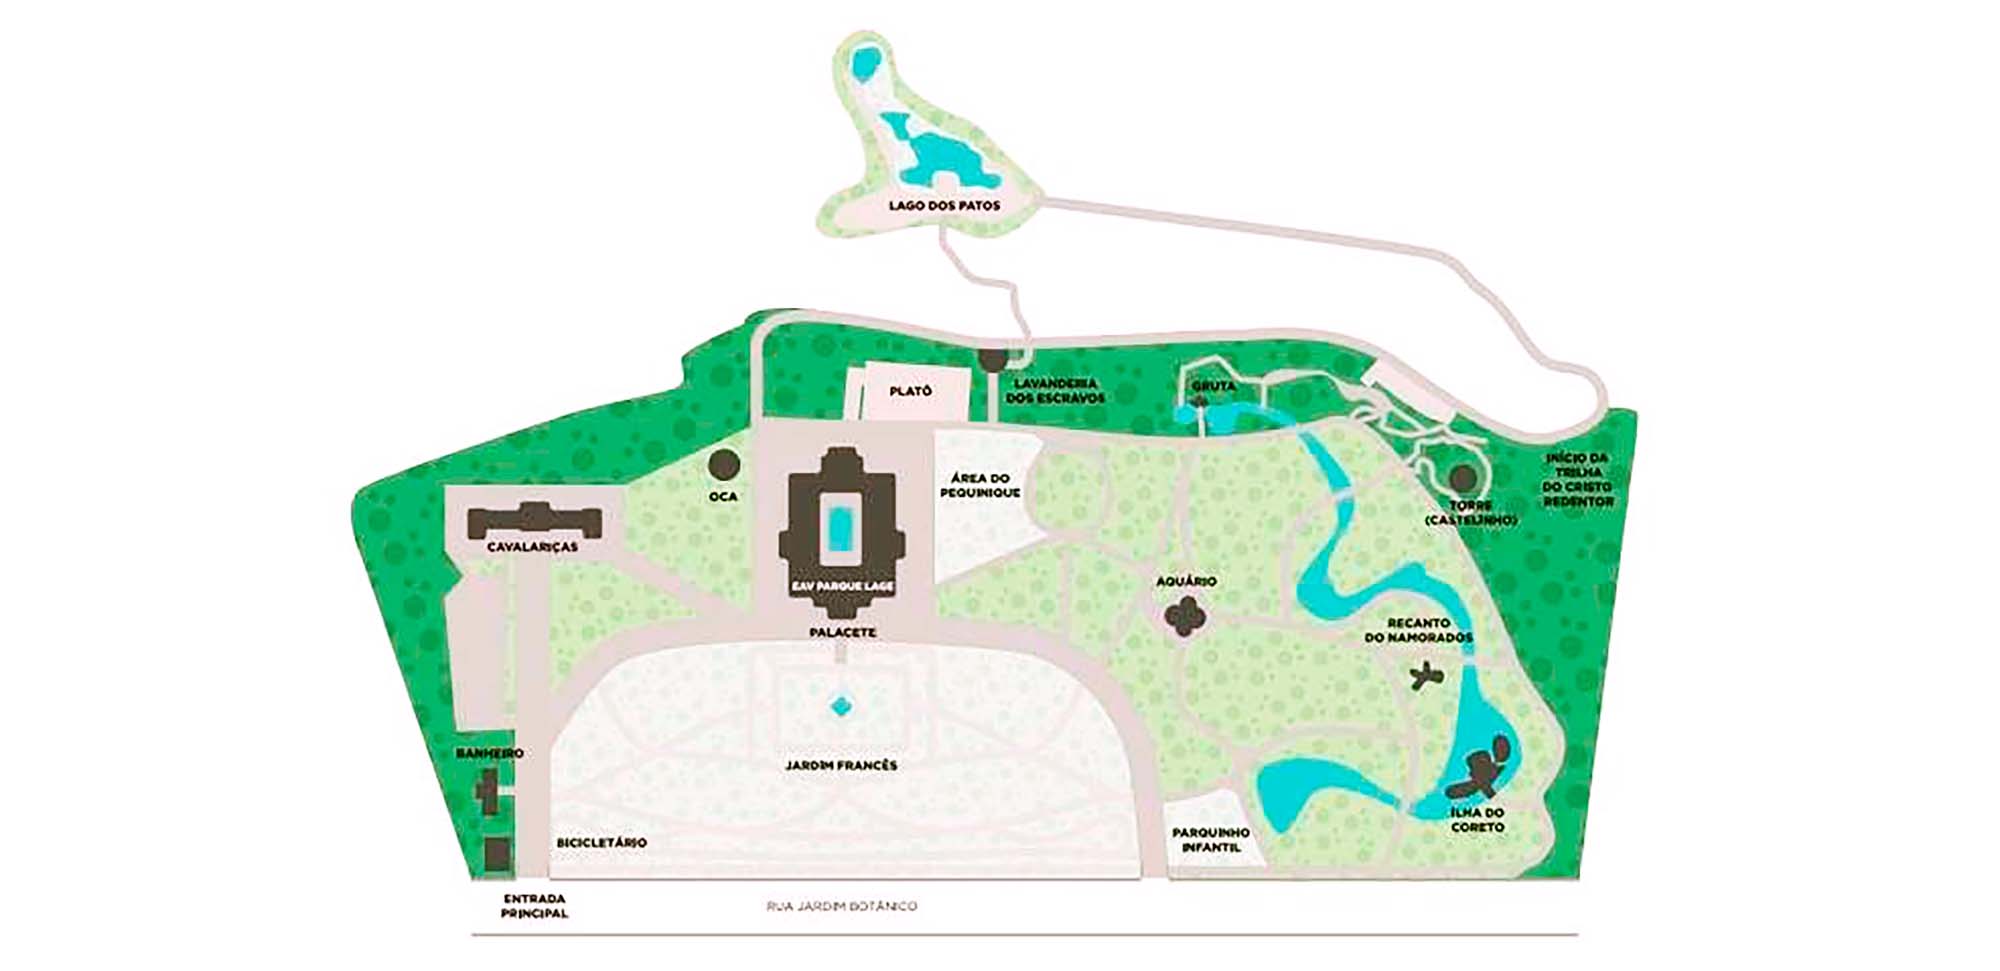 Mapa do Parque Lage